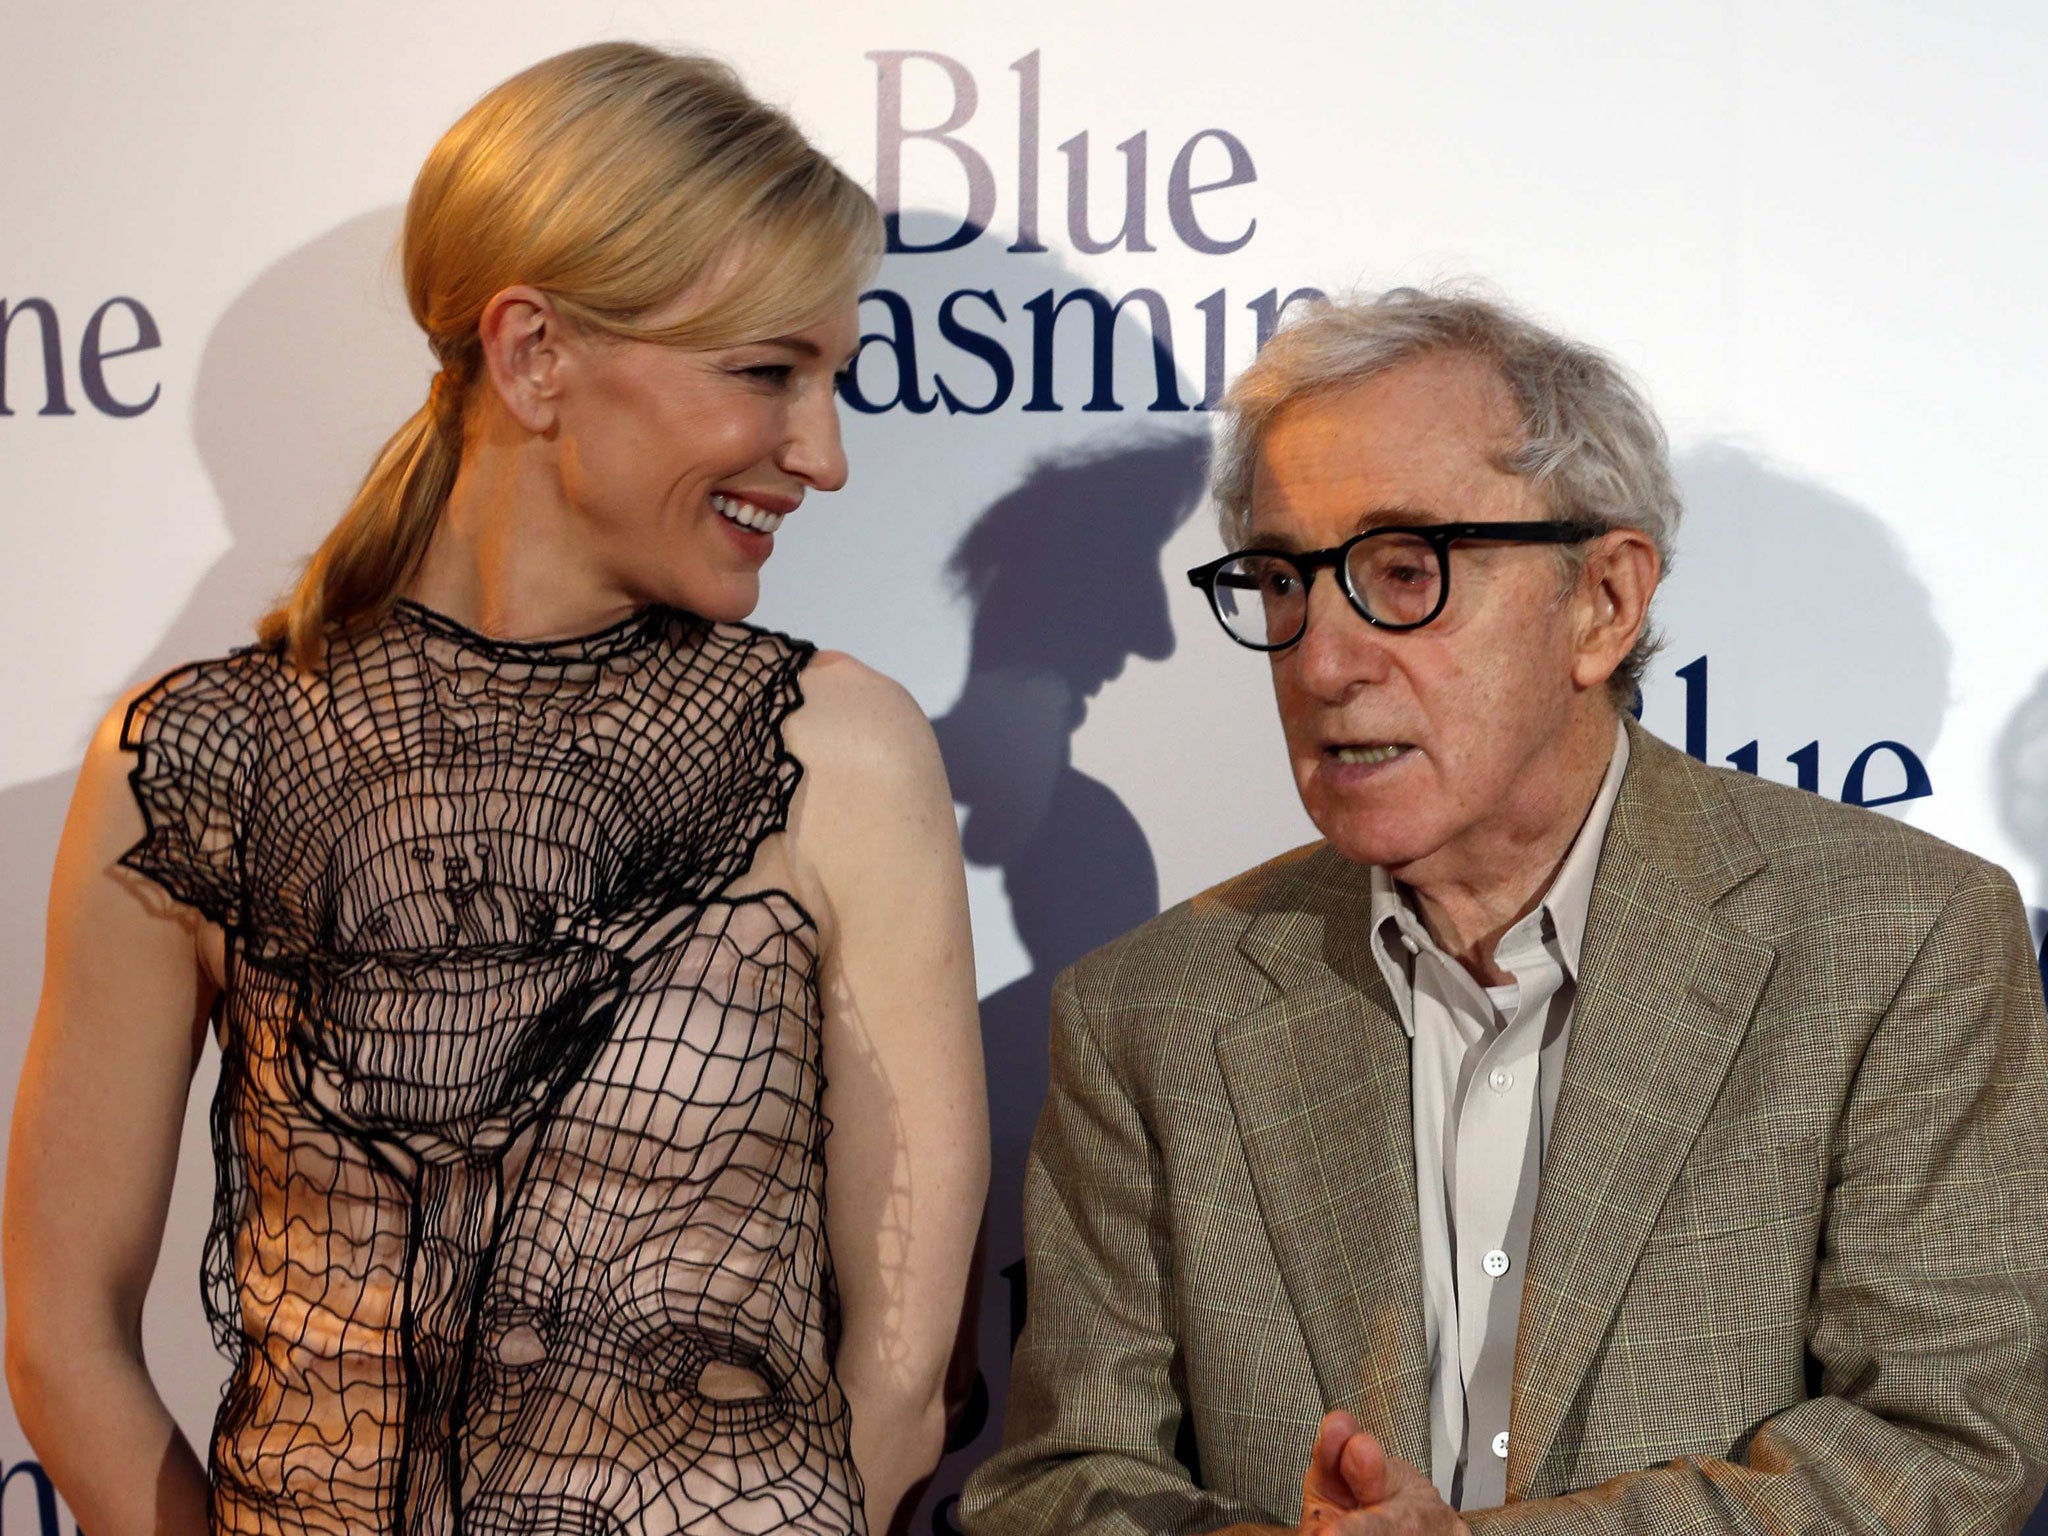 Woody Allen's new film Blue Jasmine premiered in Paris on Tuesday night